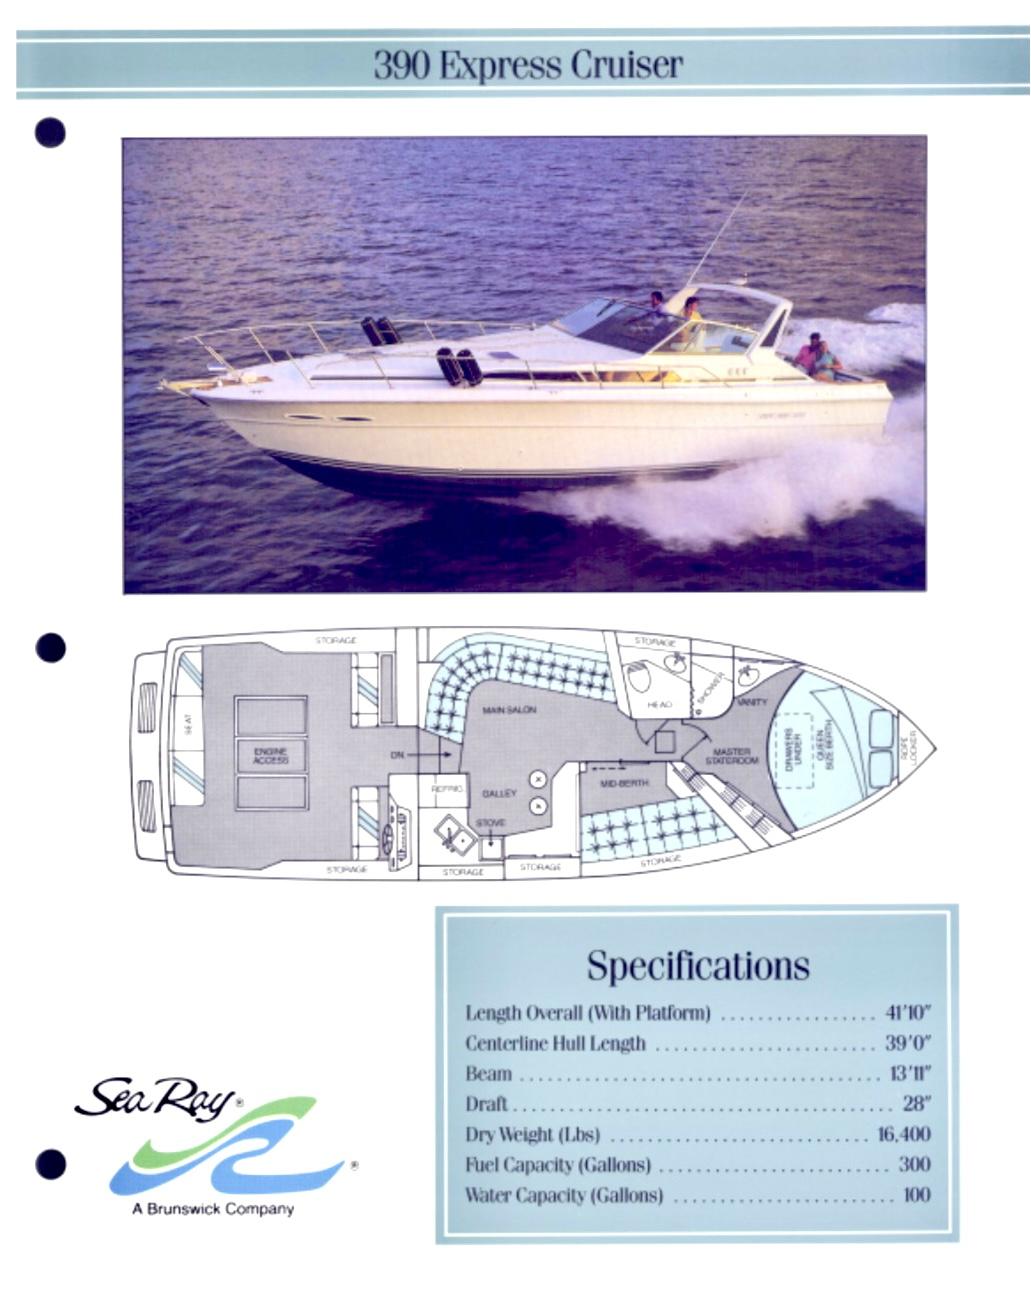 1991 Sea Ray 390 Express Cruiser